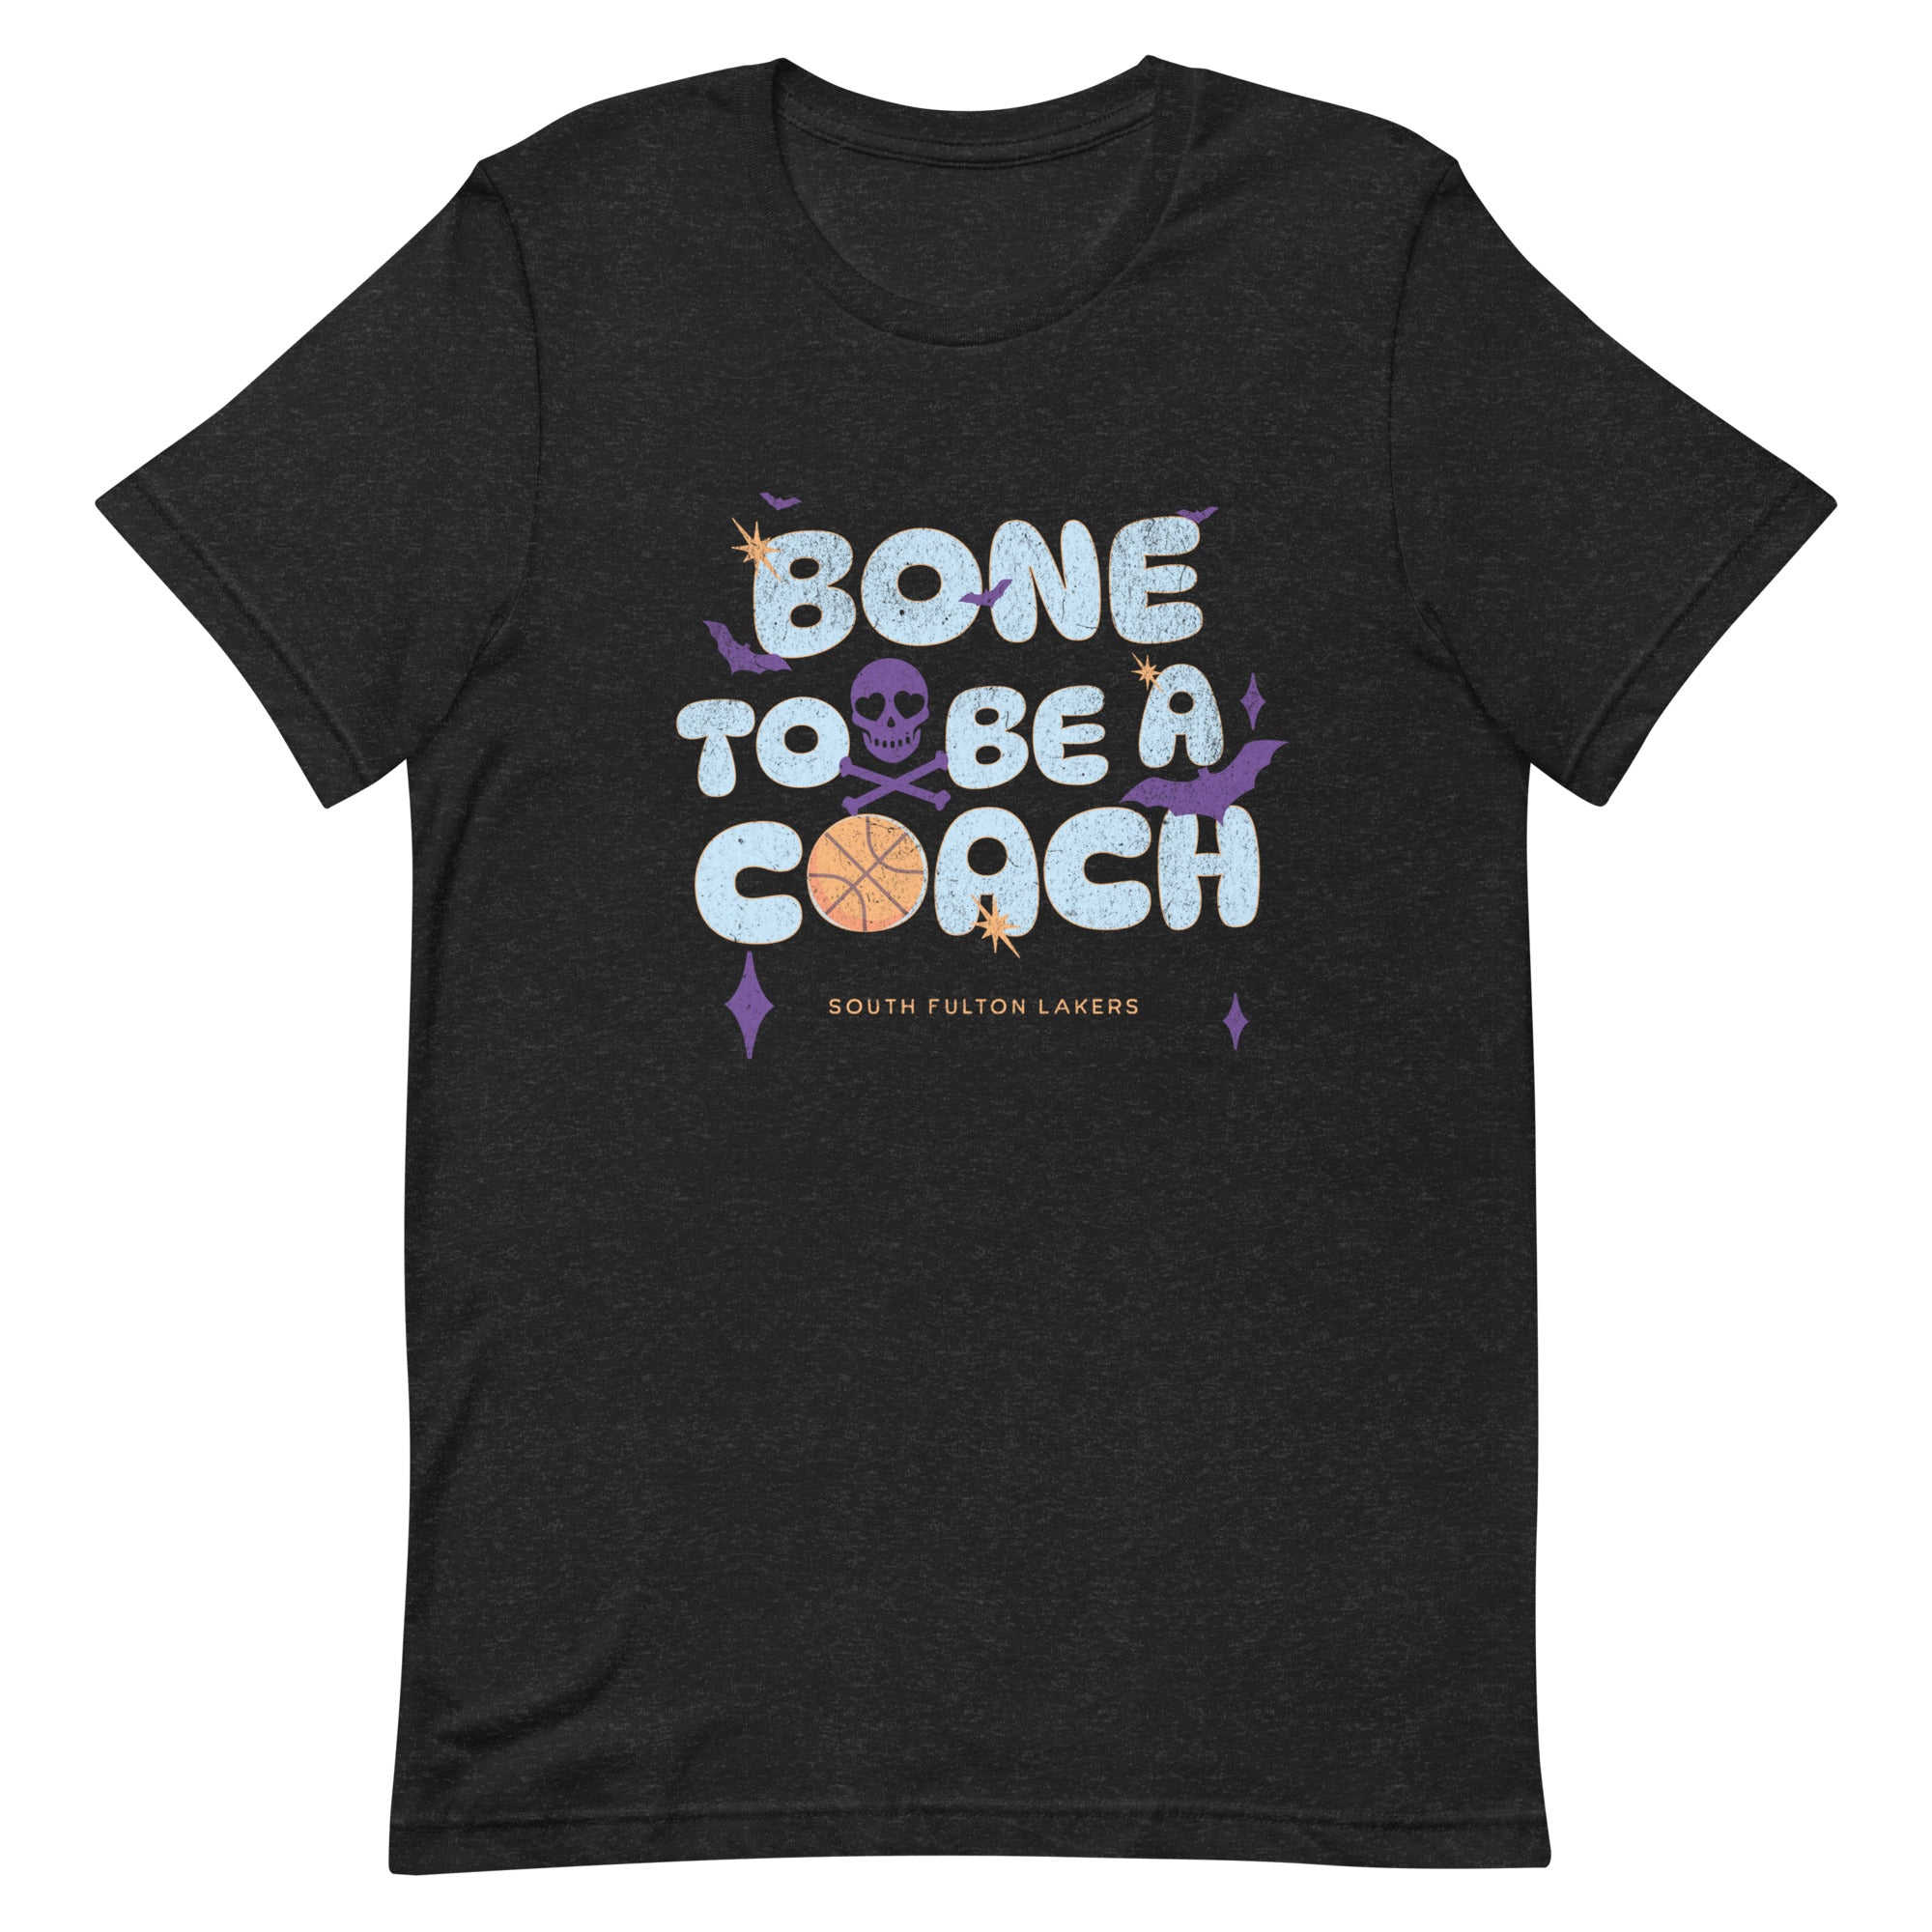 Bone to be a coach - South Fulton Lakers Unisex T-shirt